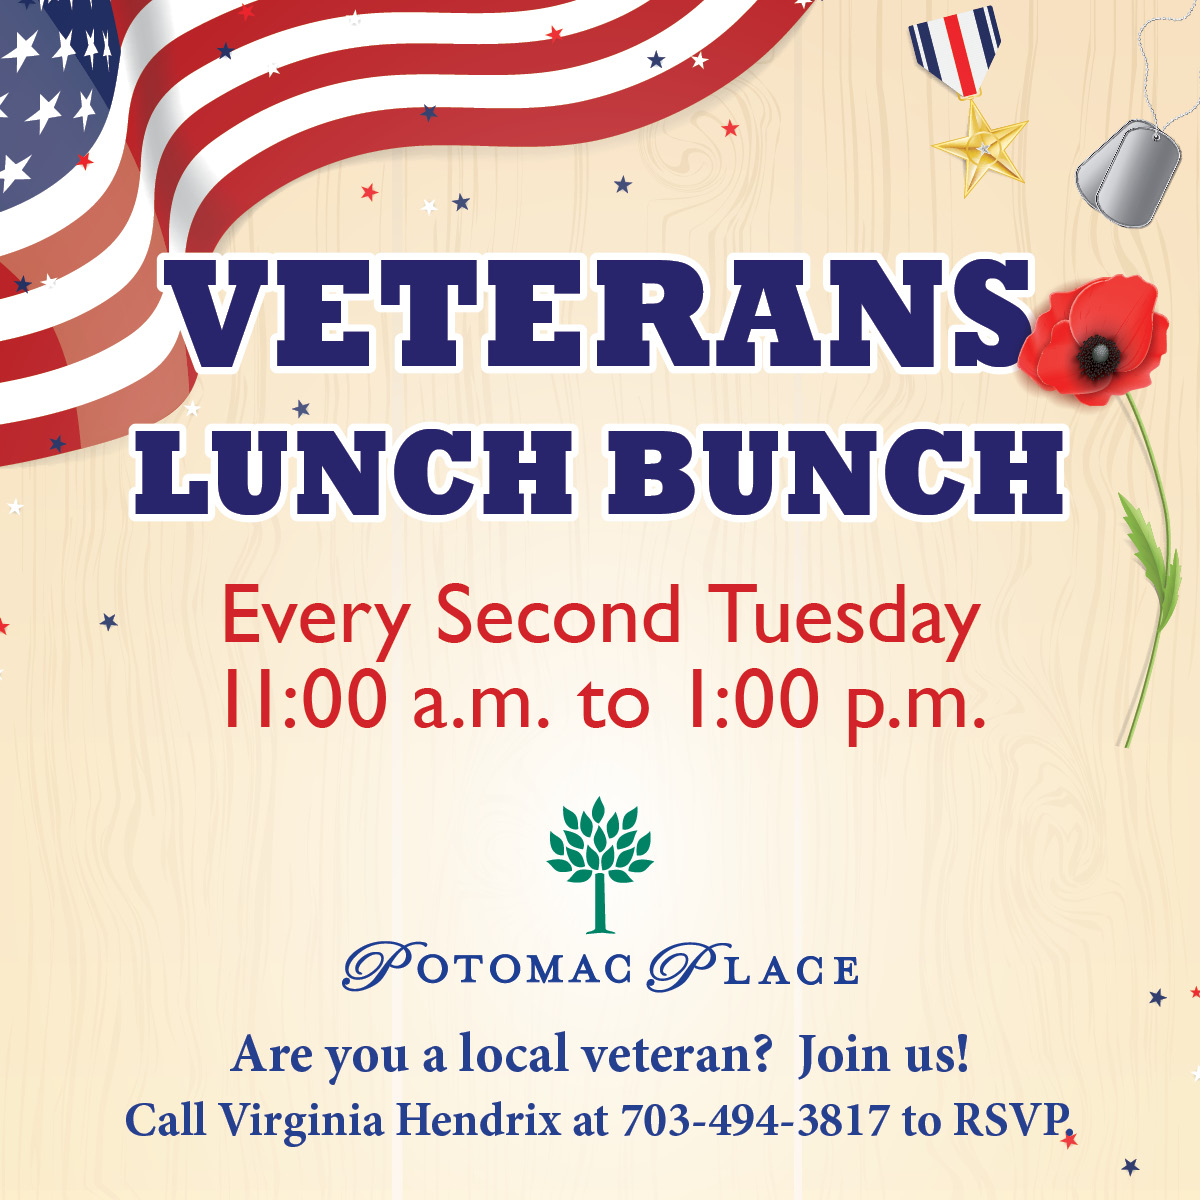 veterans lunch bunch, Potomac Place